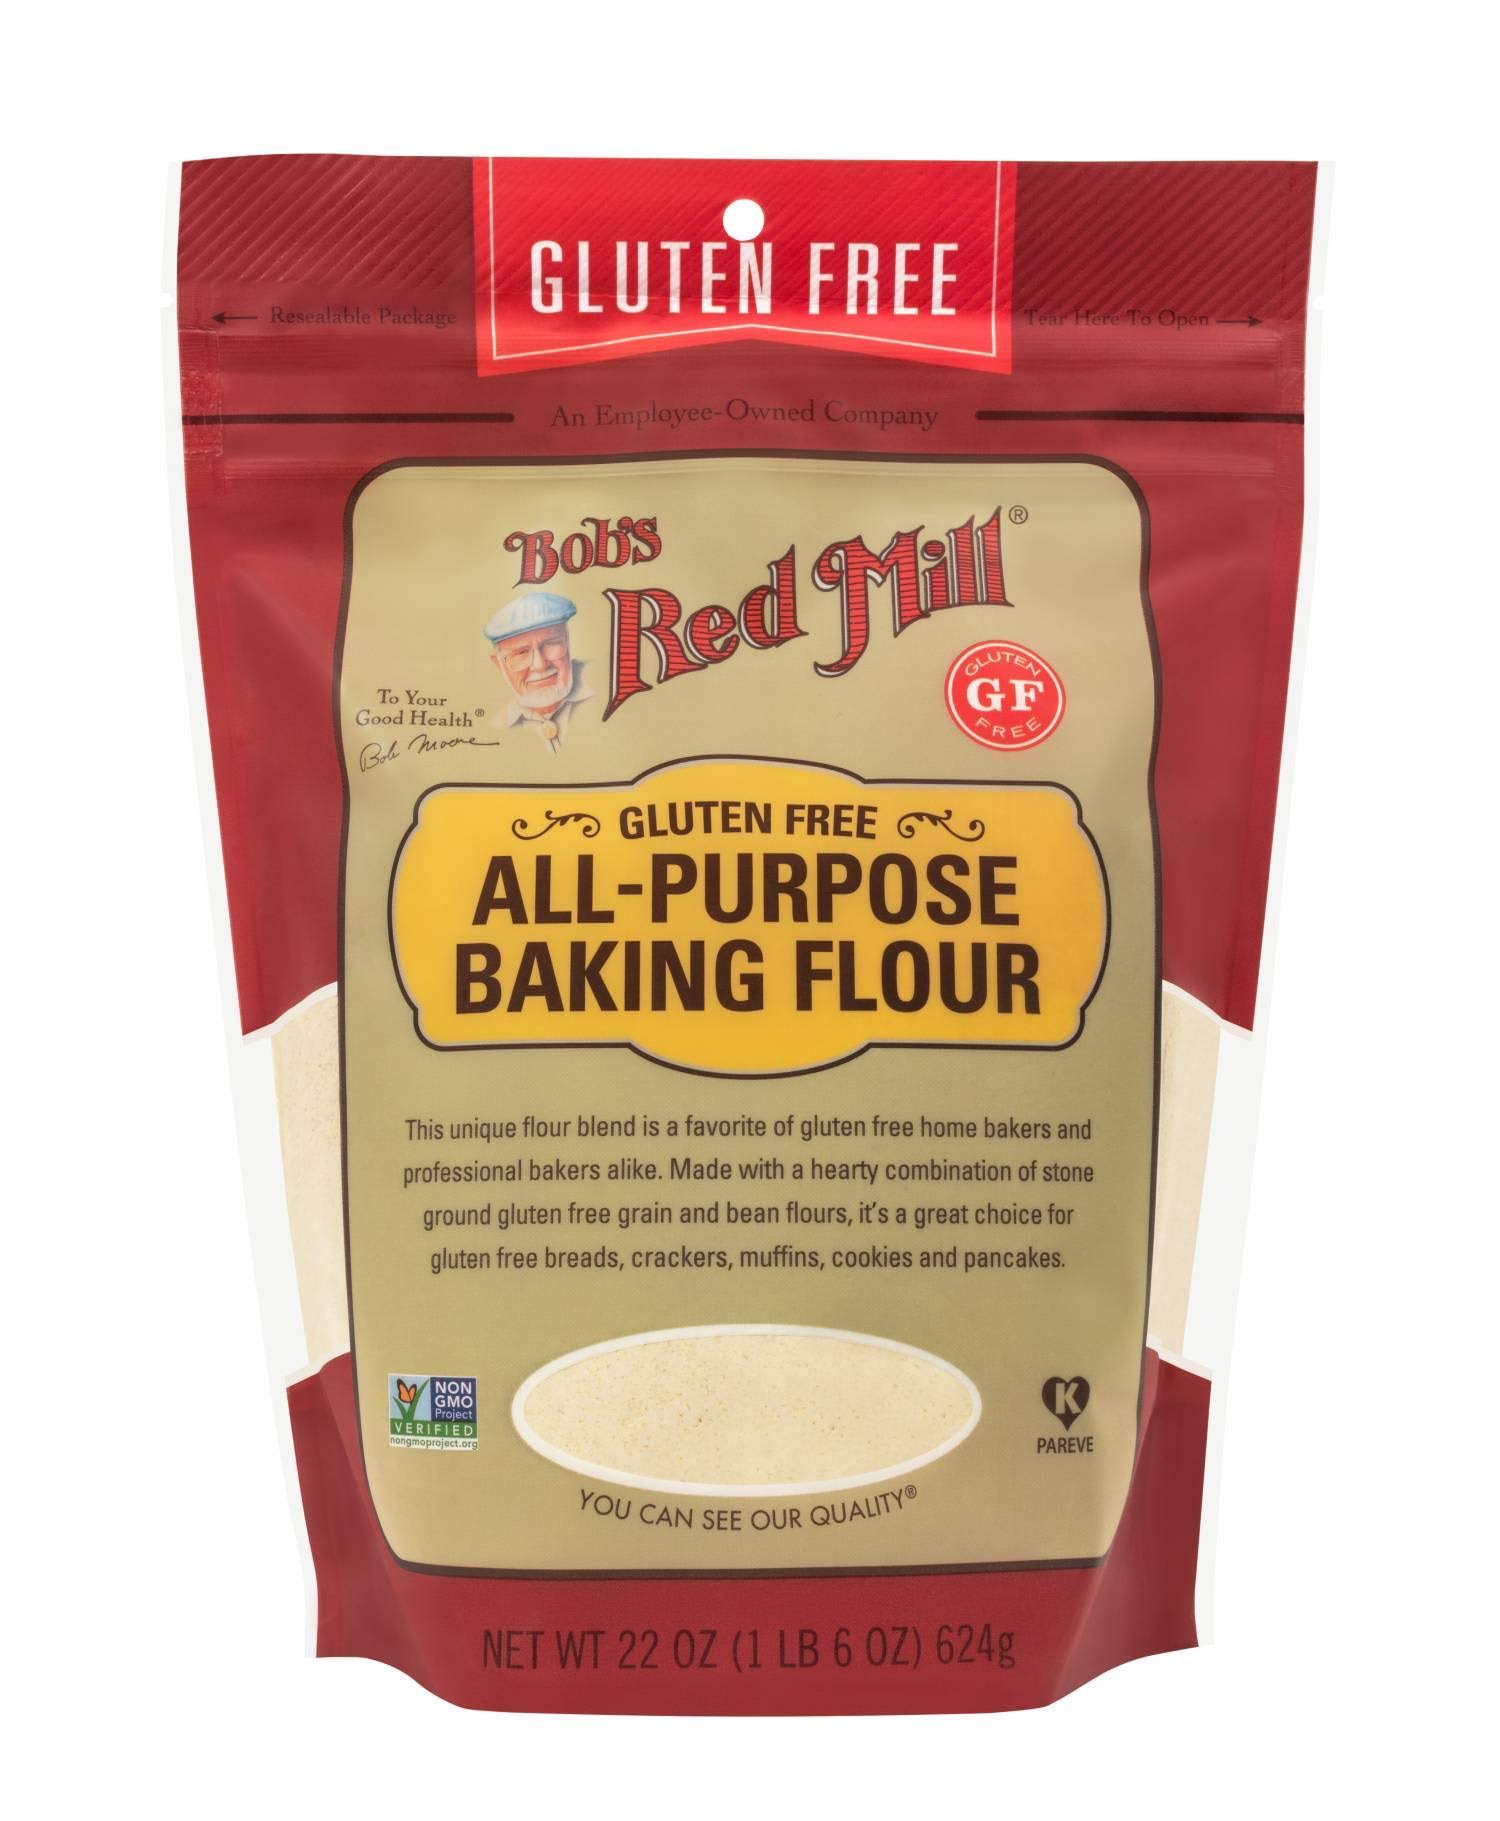 Bobs Red Mill Gluten Free Baking Flour, All-Purpose - 22 oz